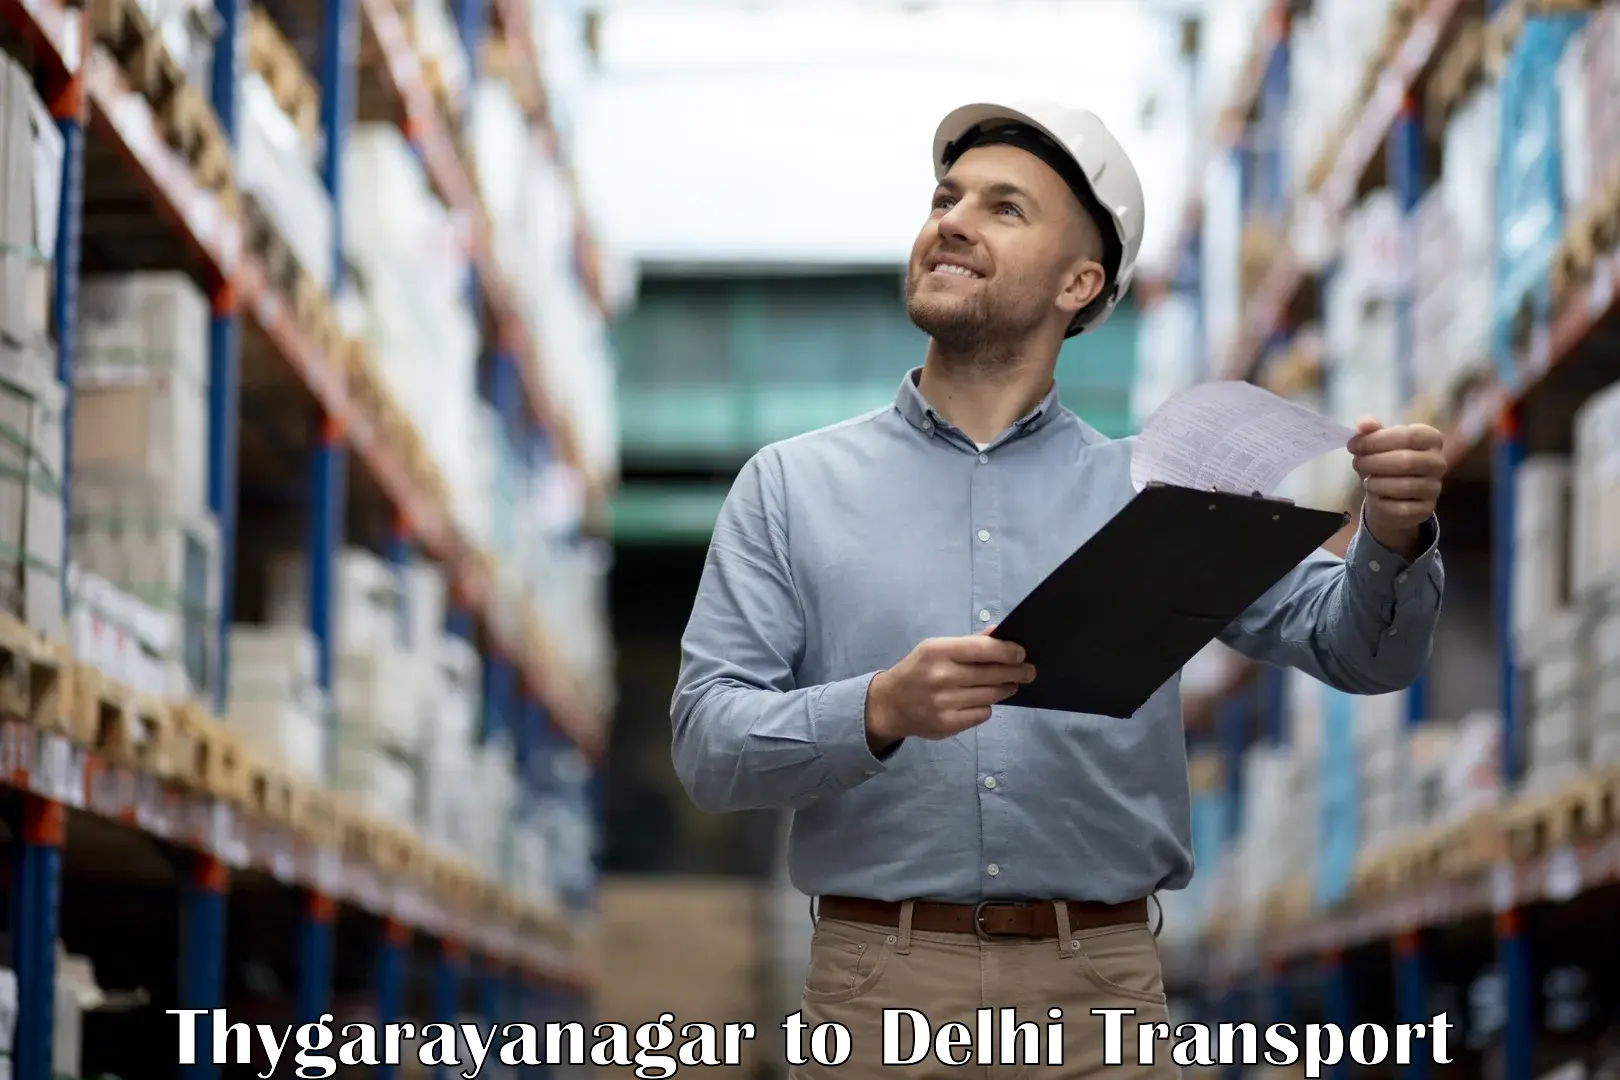 Goods delivery service Thygarayanagar to East Delhi